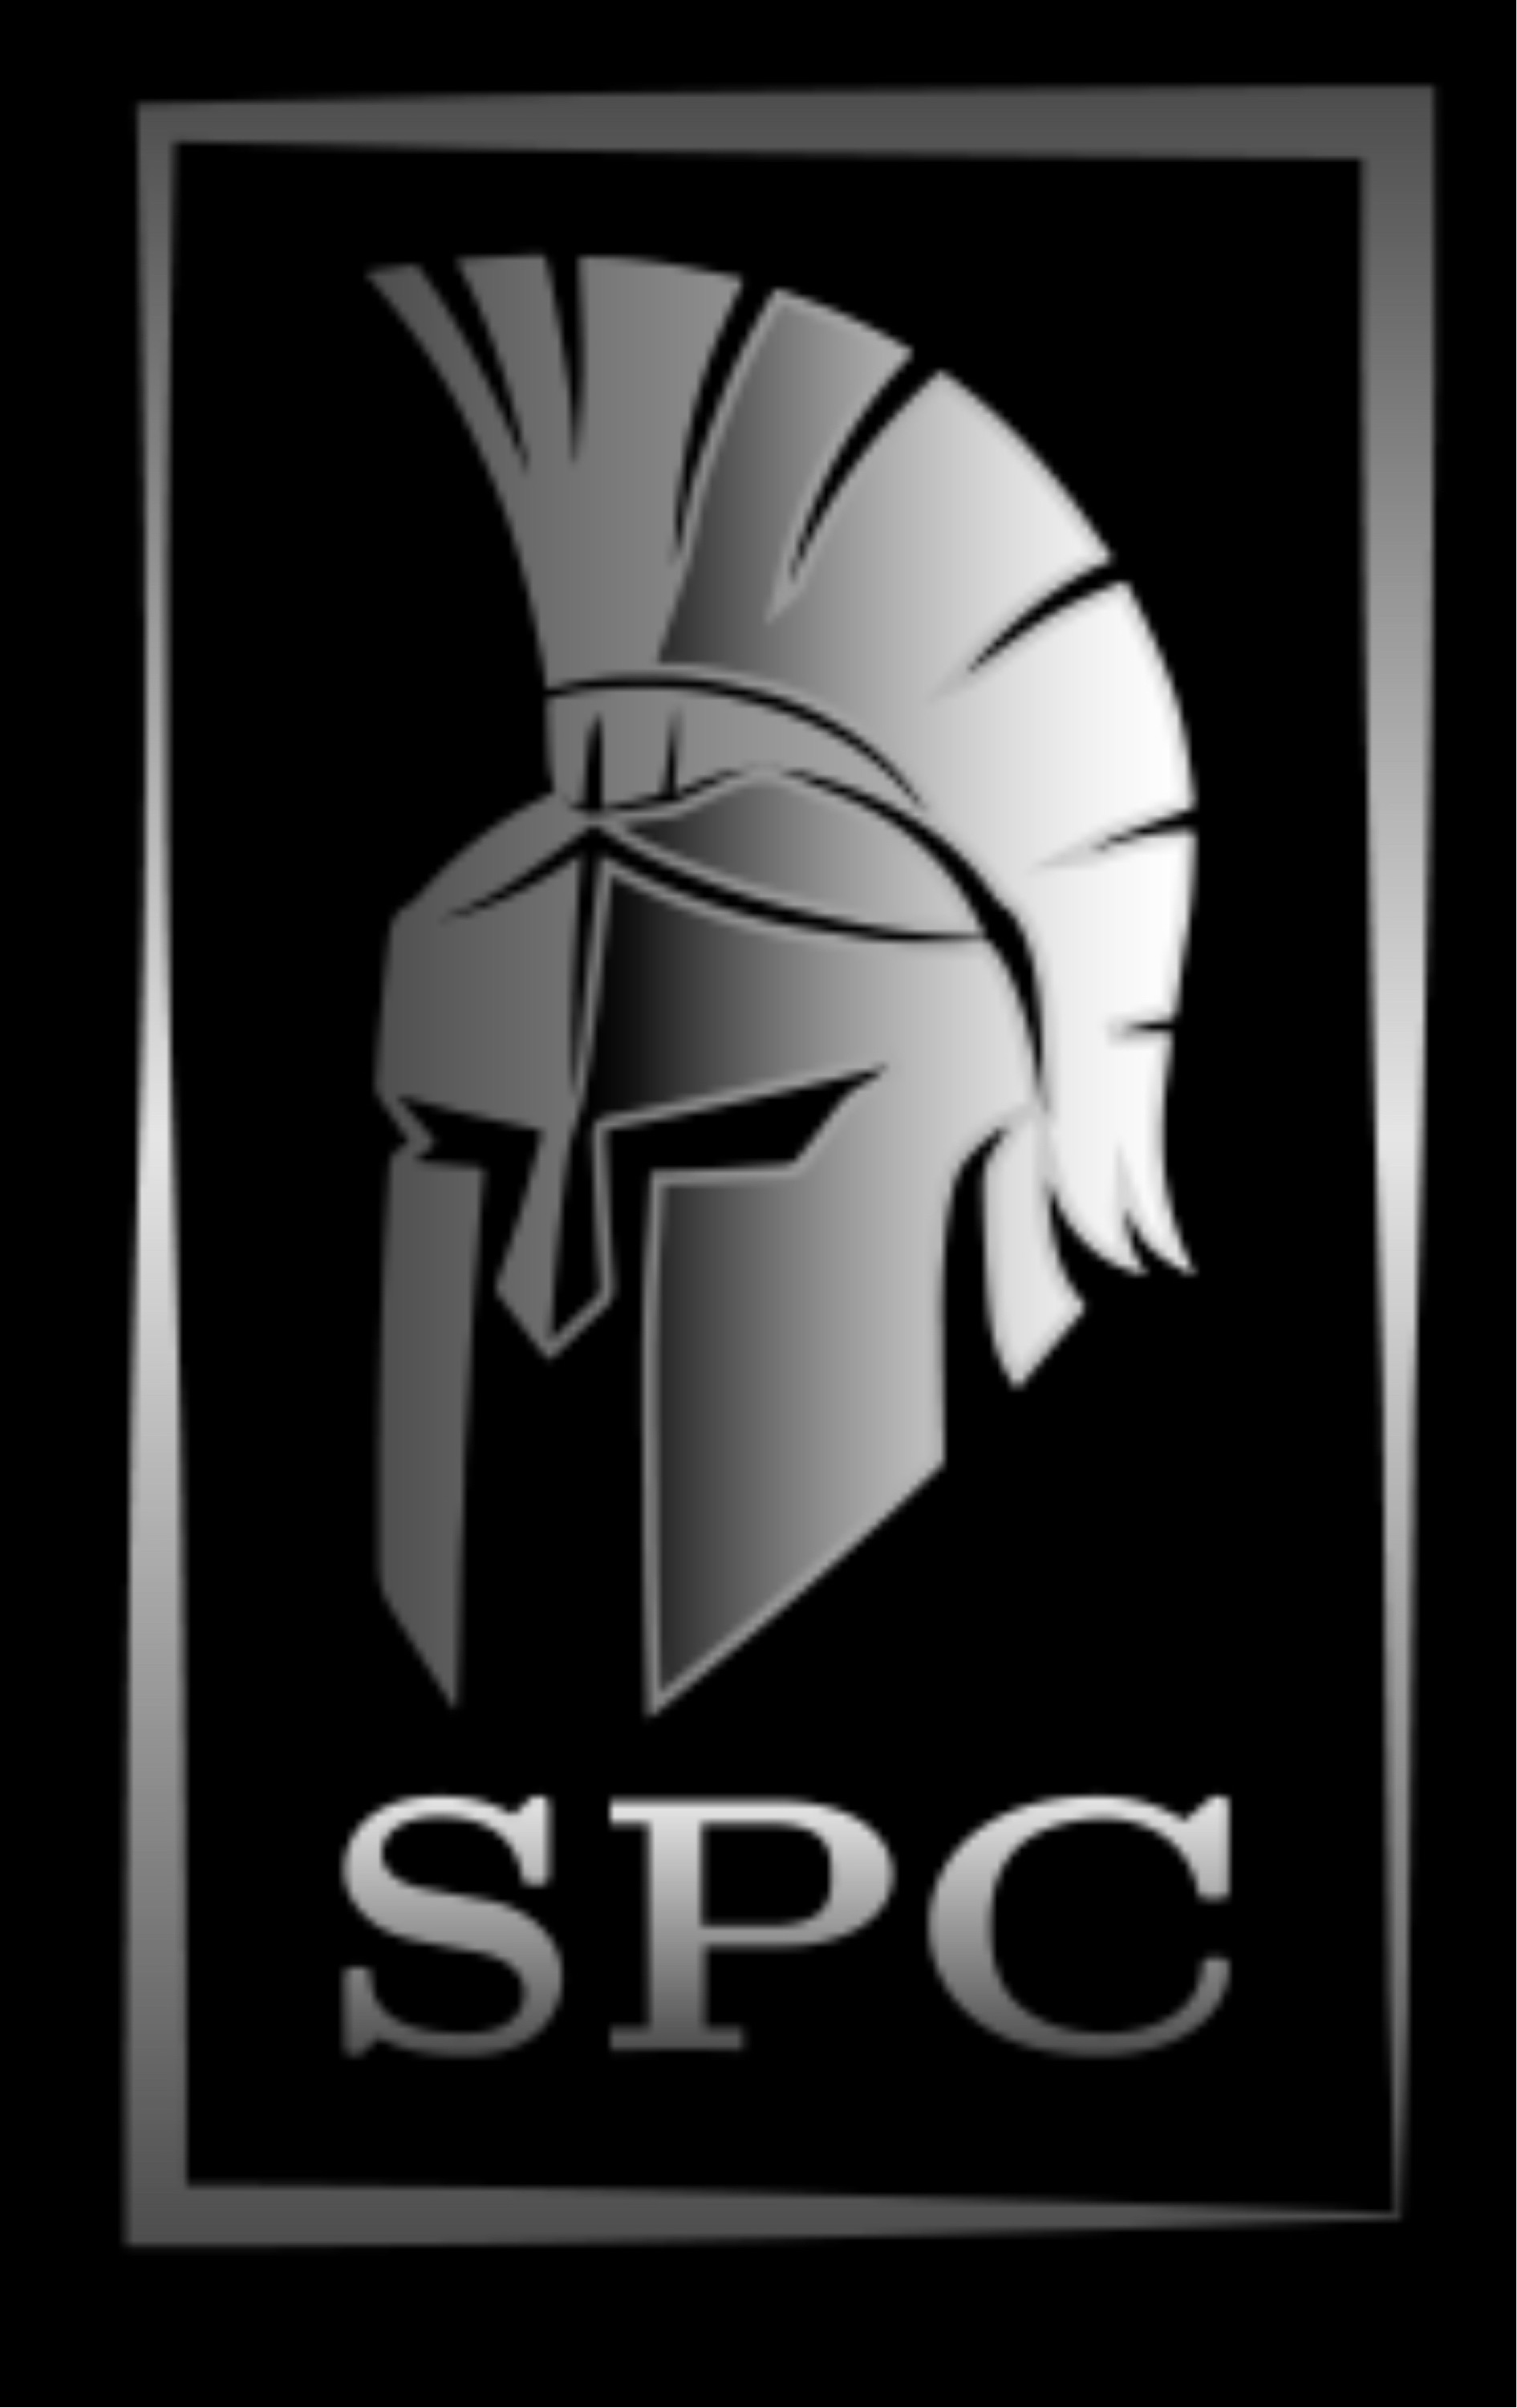 Spartan Pest Control Logo